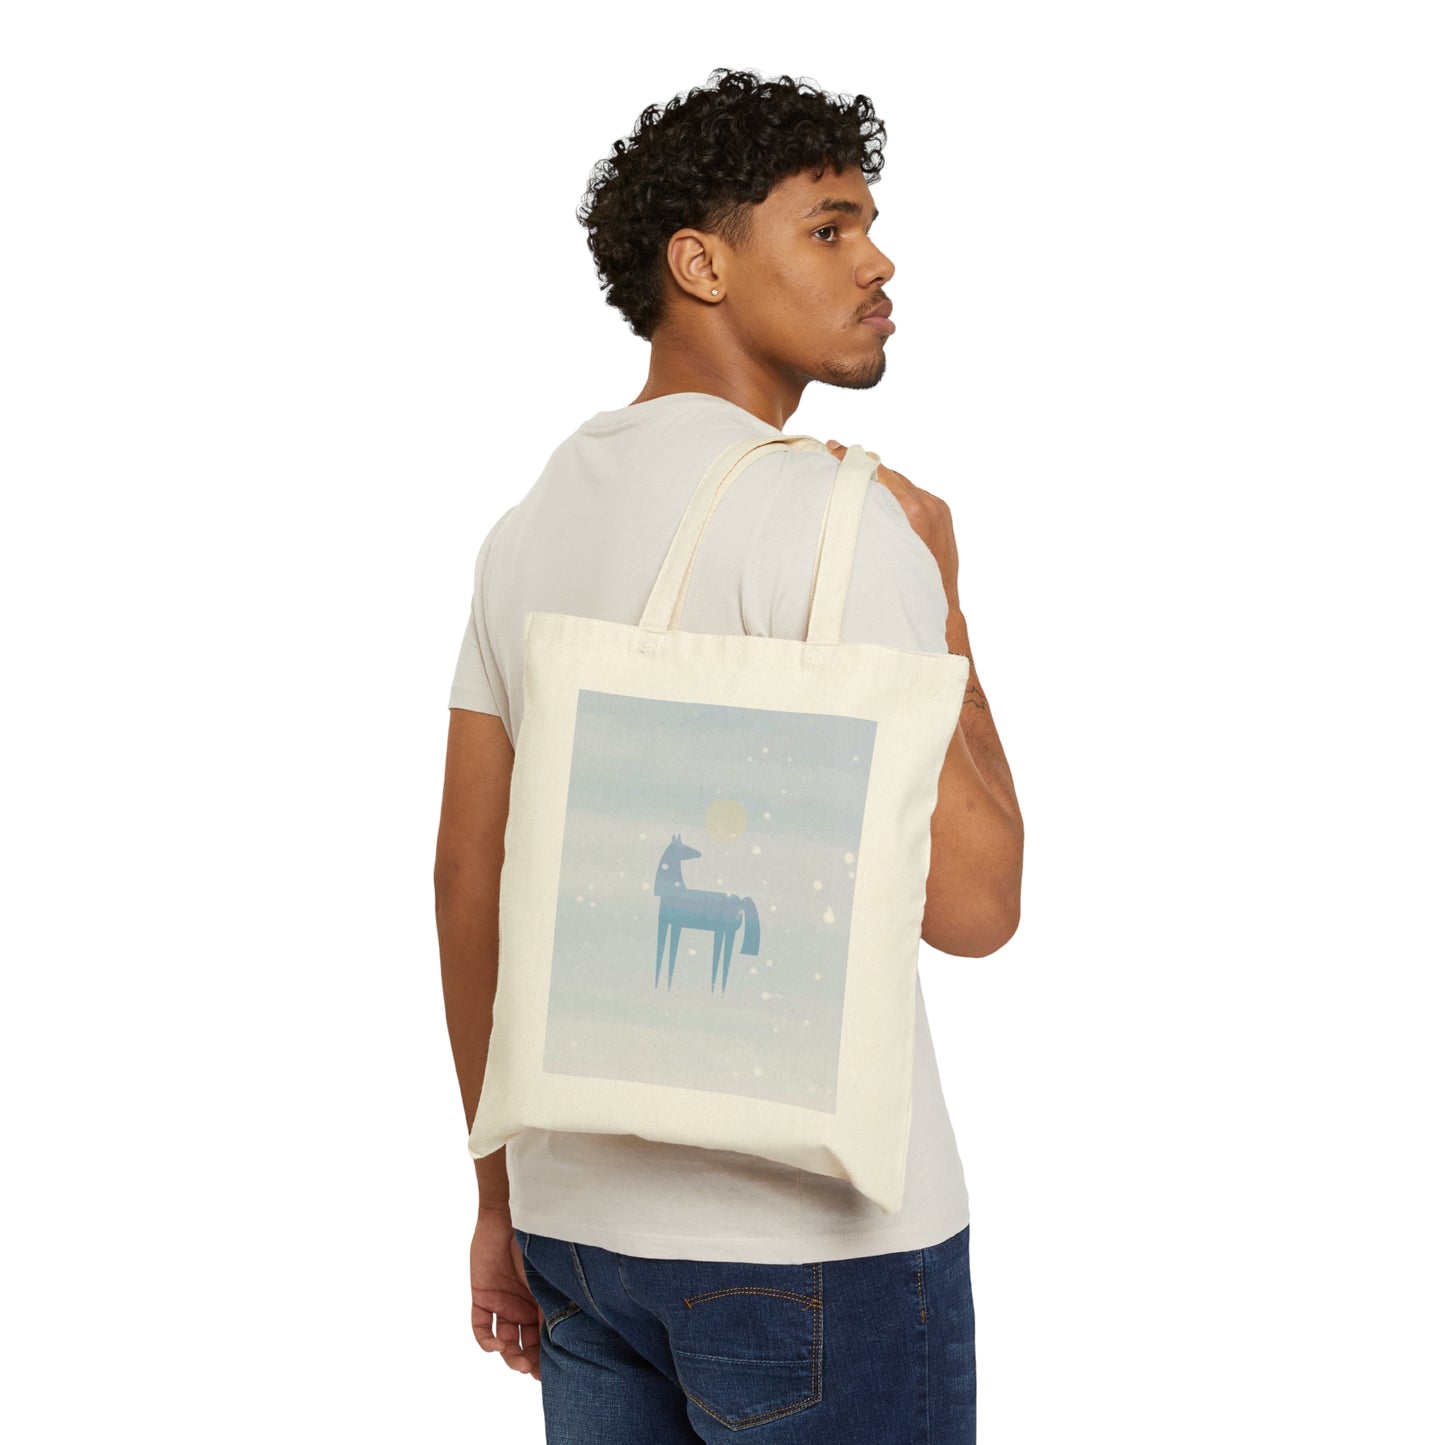 Horse Under the Snow Winter Landscape Art Canvas Shopping Cotton Tote Bag